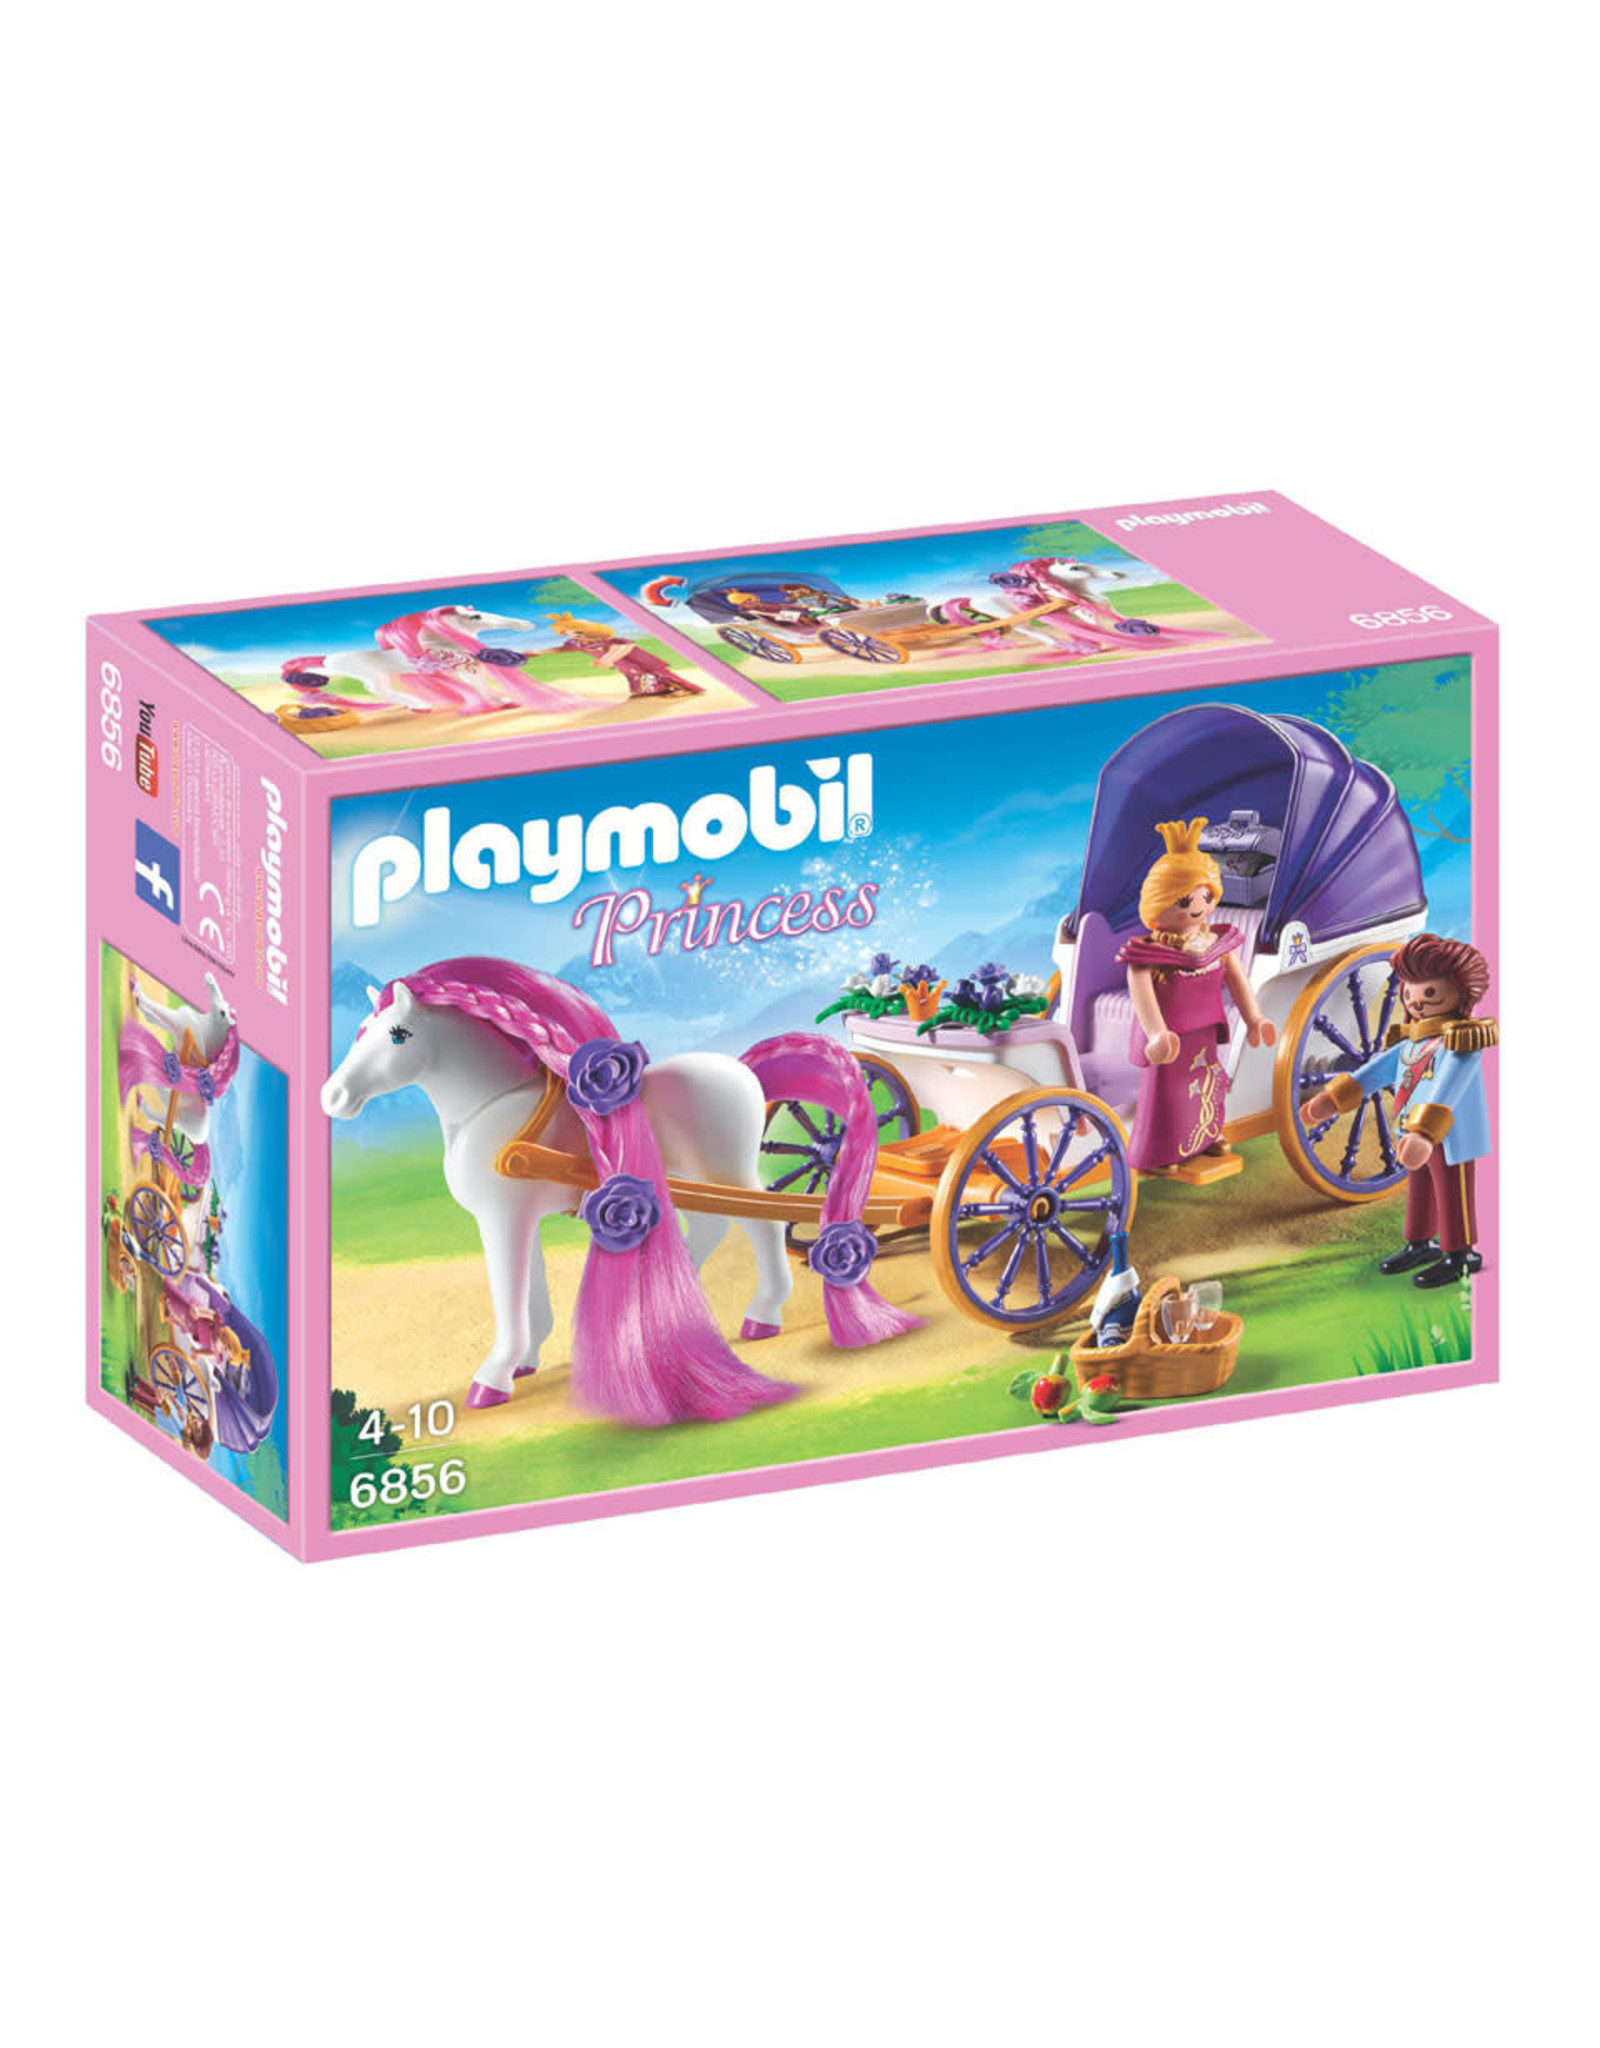 Playmobil Playmobil Princess 6856 Koninklijke Koets met Paard